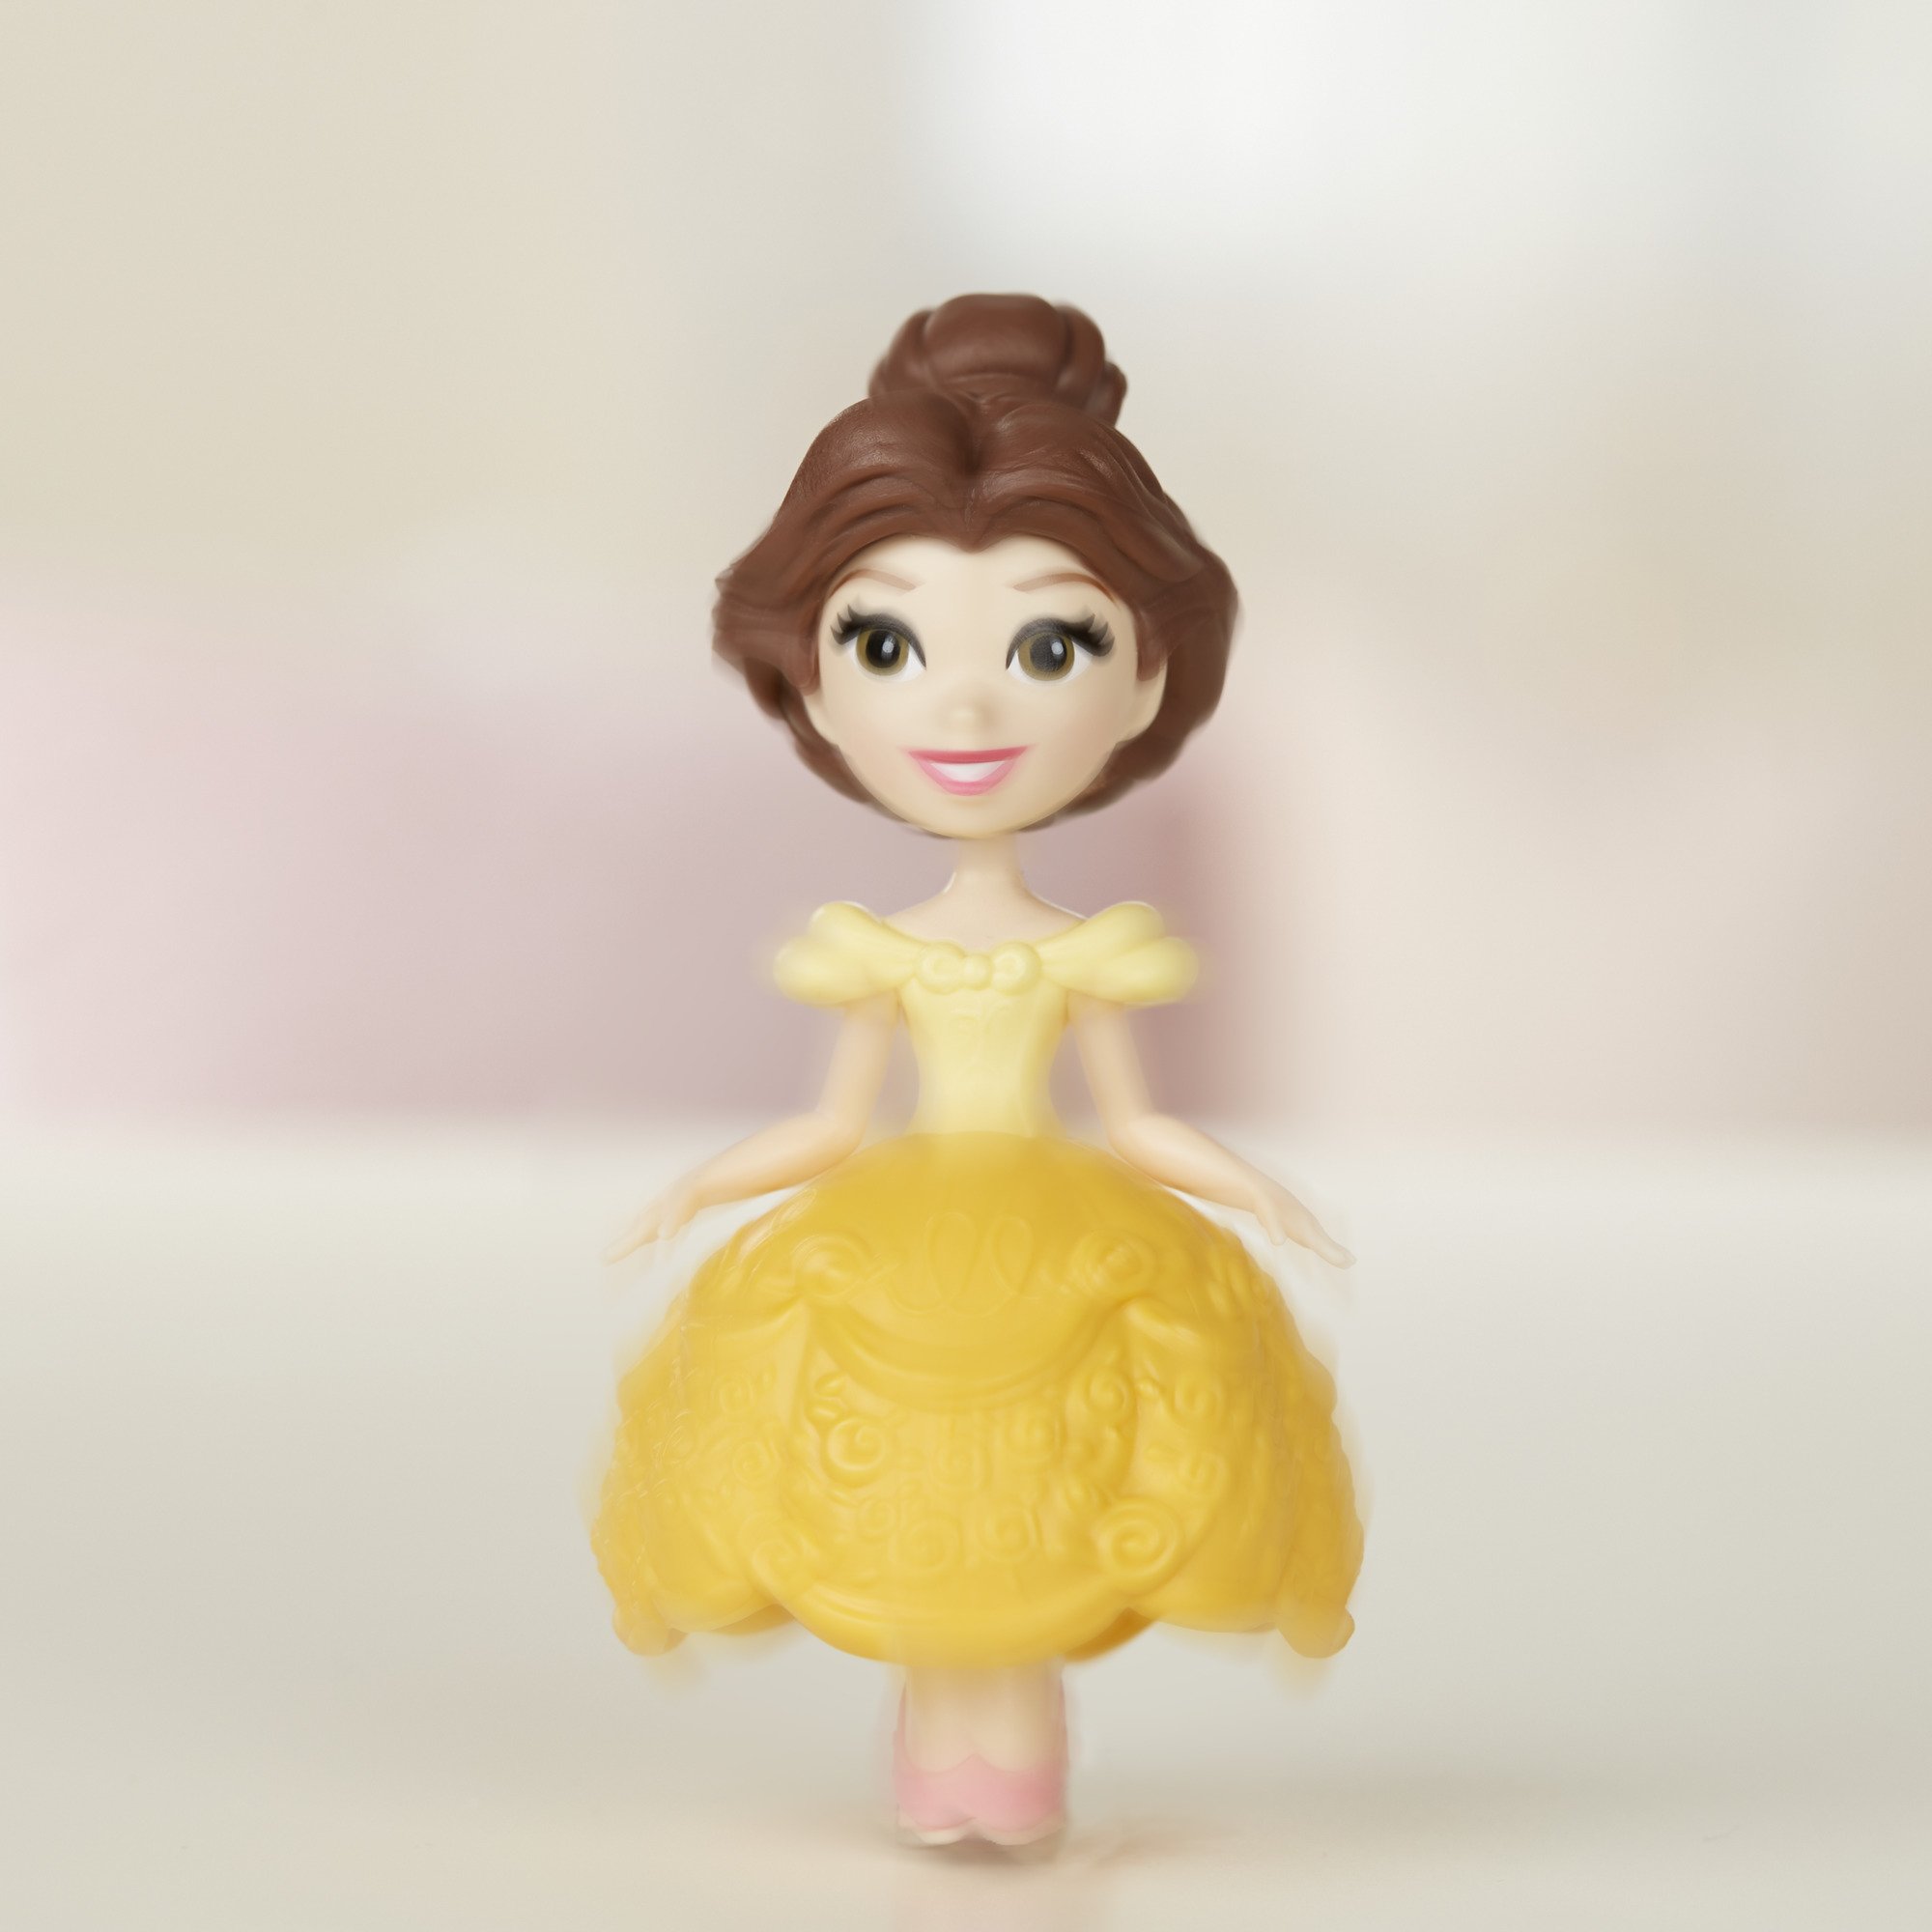 Sal&oacute;n de Baile Magical Movers Disney Princesas Hasbro